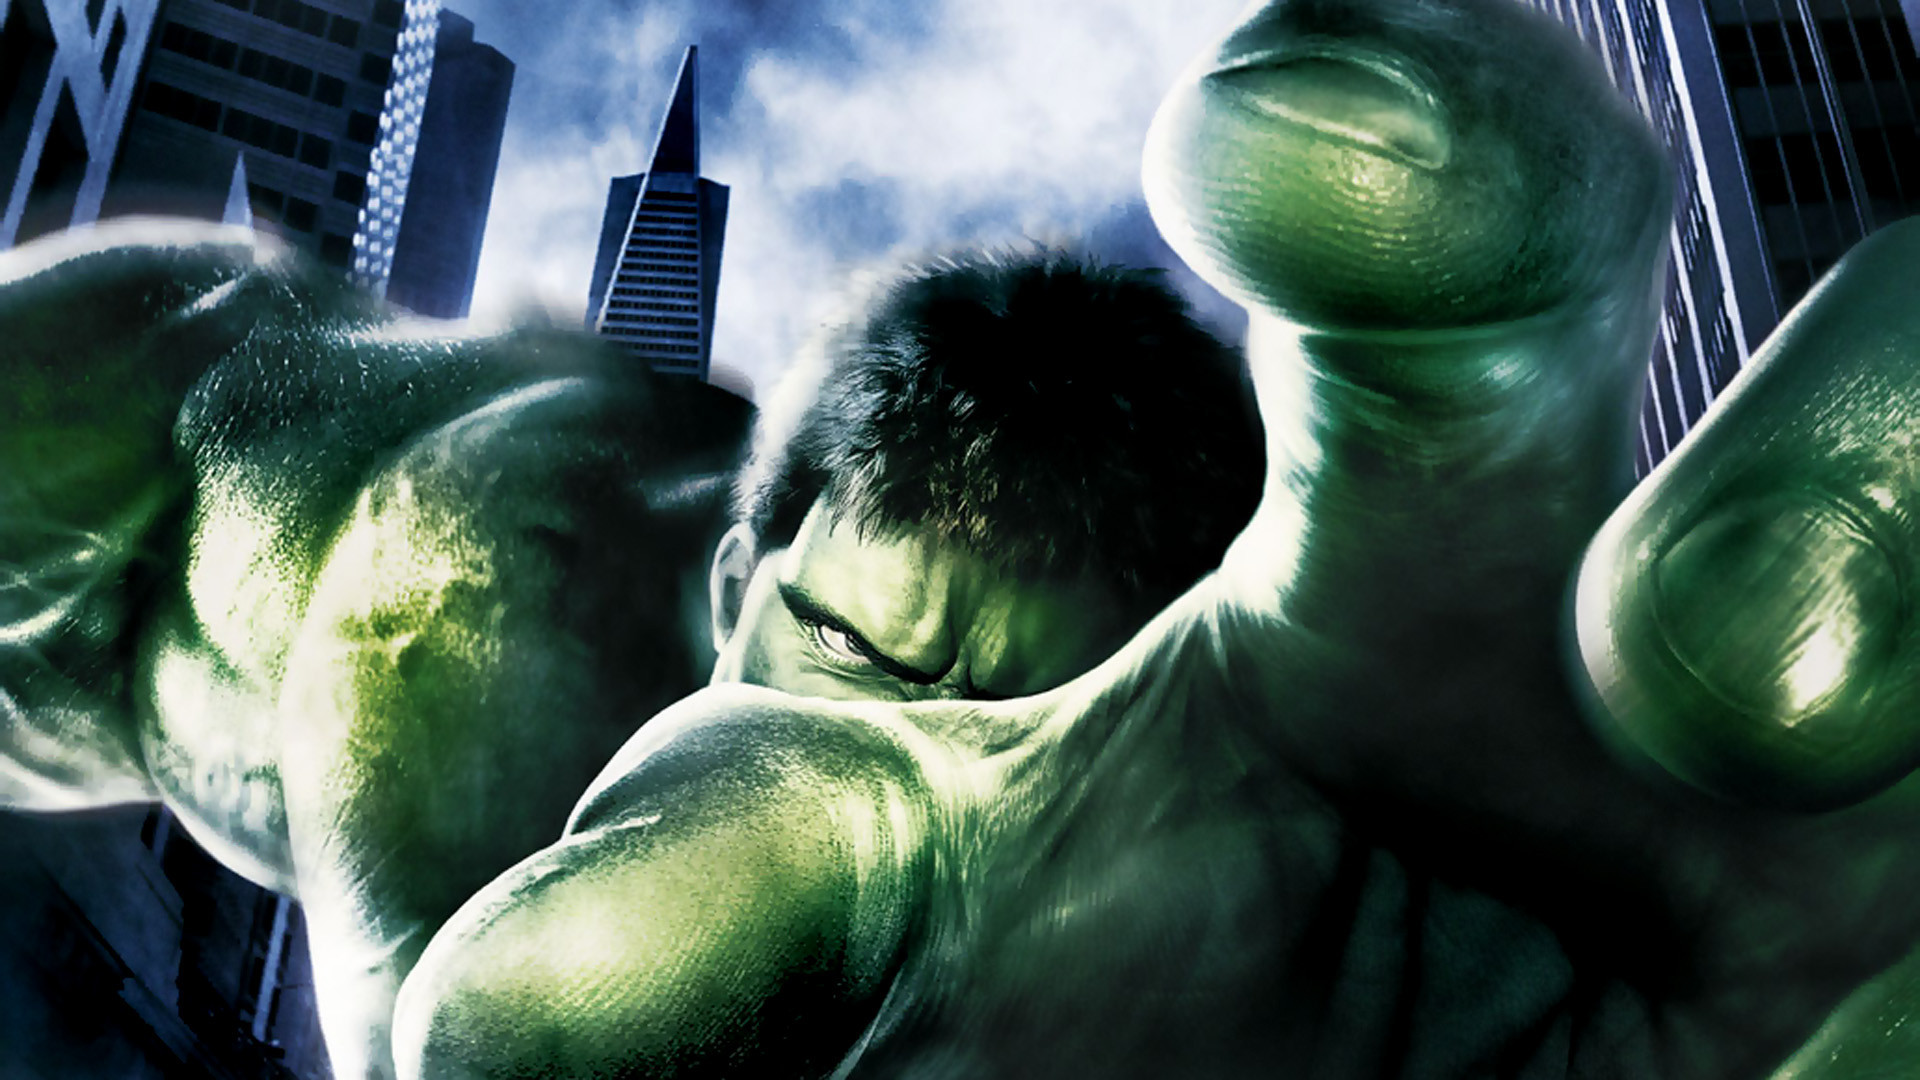 HD Wallpaper Hulk Movie Wallpaper55 Best For Pcs